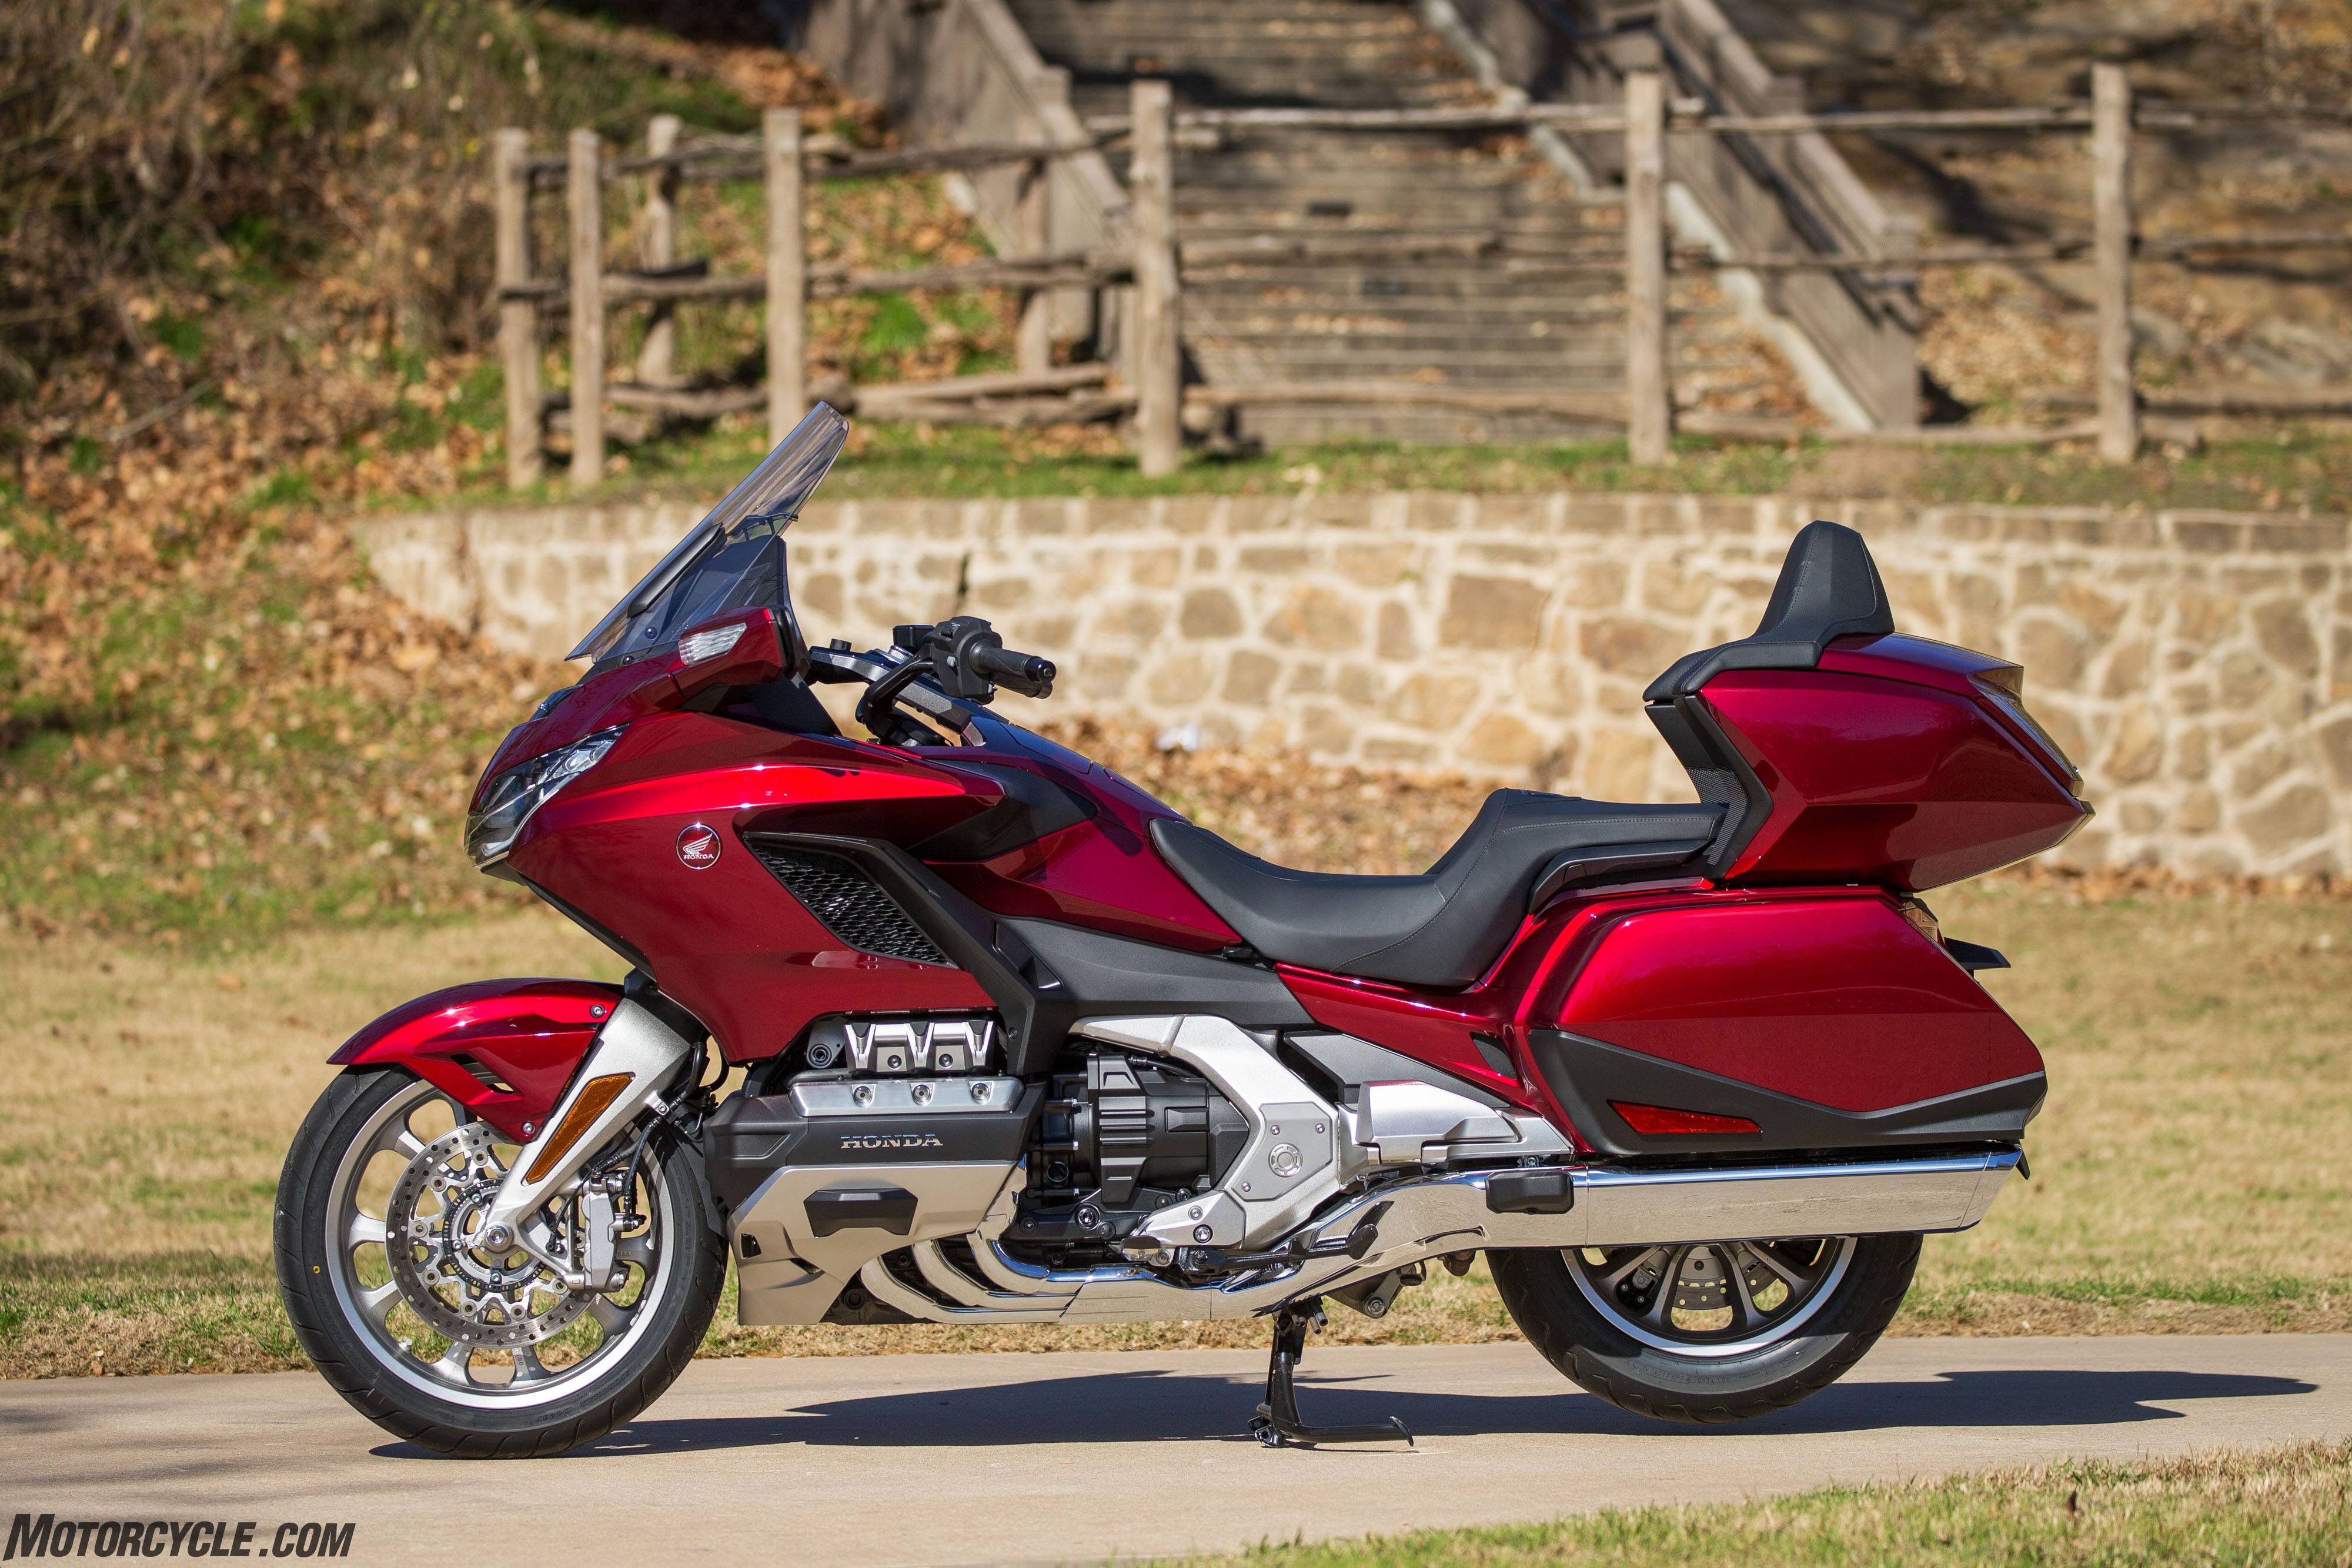 Мотоцикл honda gl 1200 gold wing — туристический мотоцикл серии голд винг